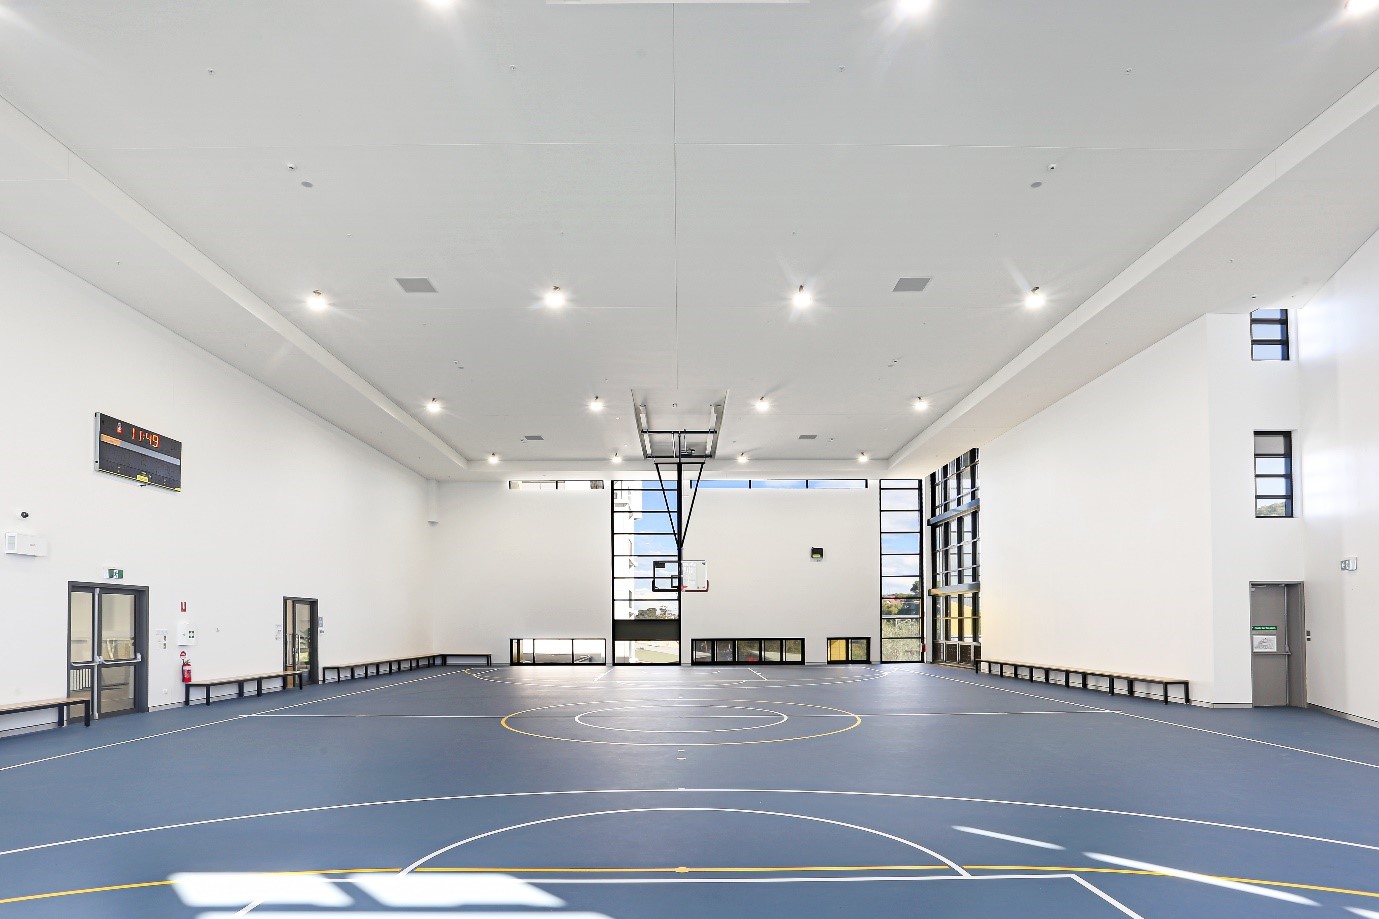 image showing second floor court